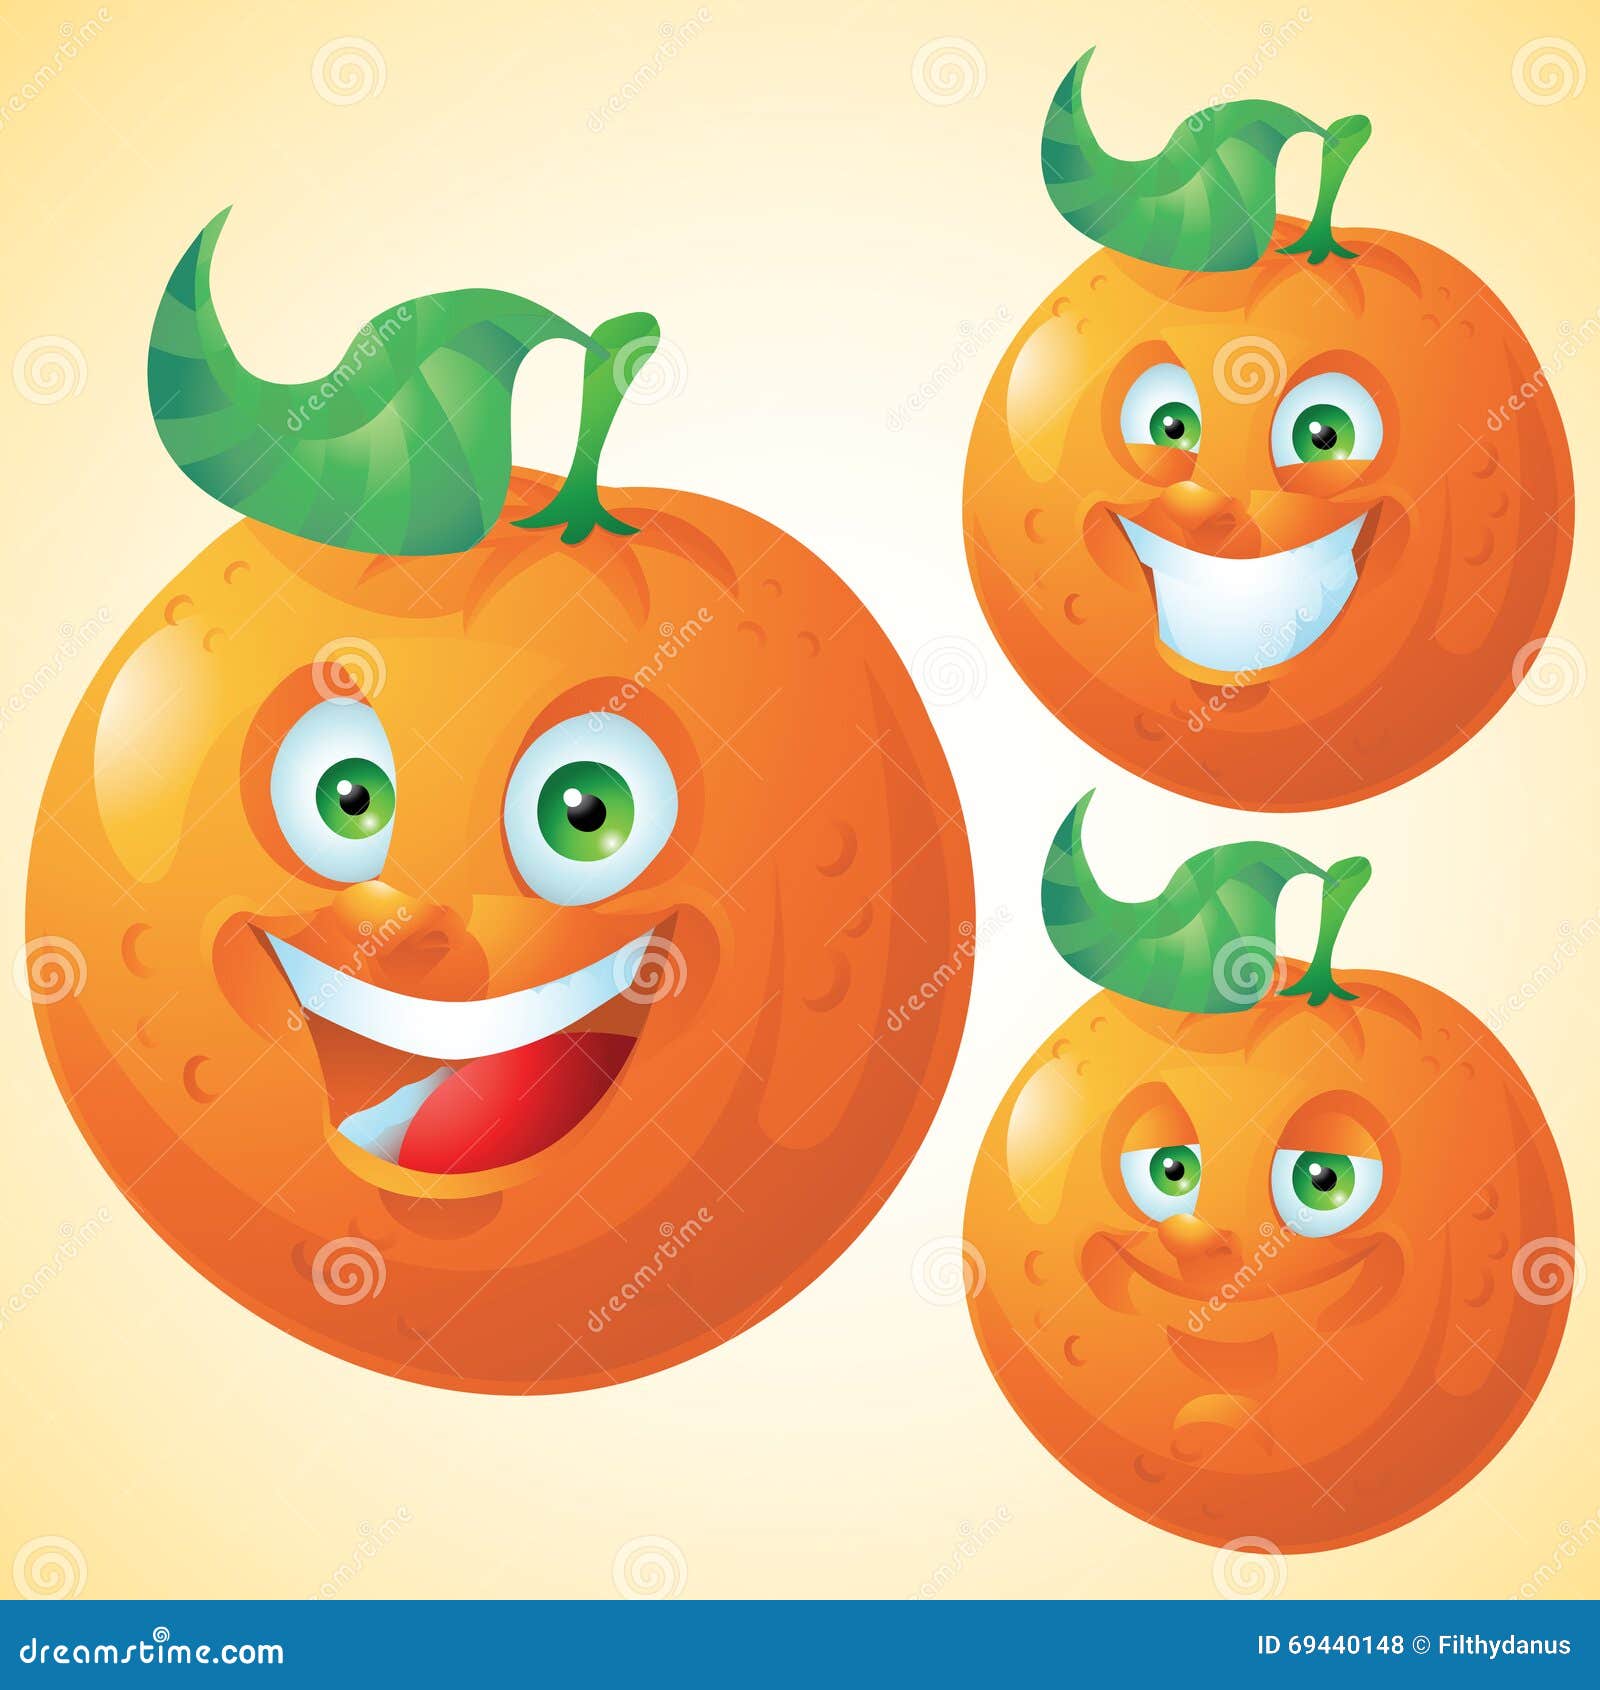  Orange  Face  Expression Cartoon  Character Set Stock Vector 